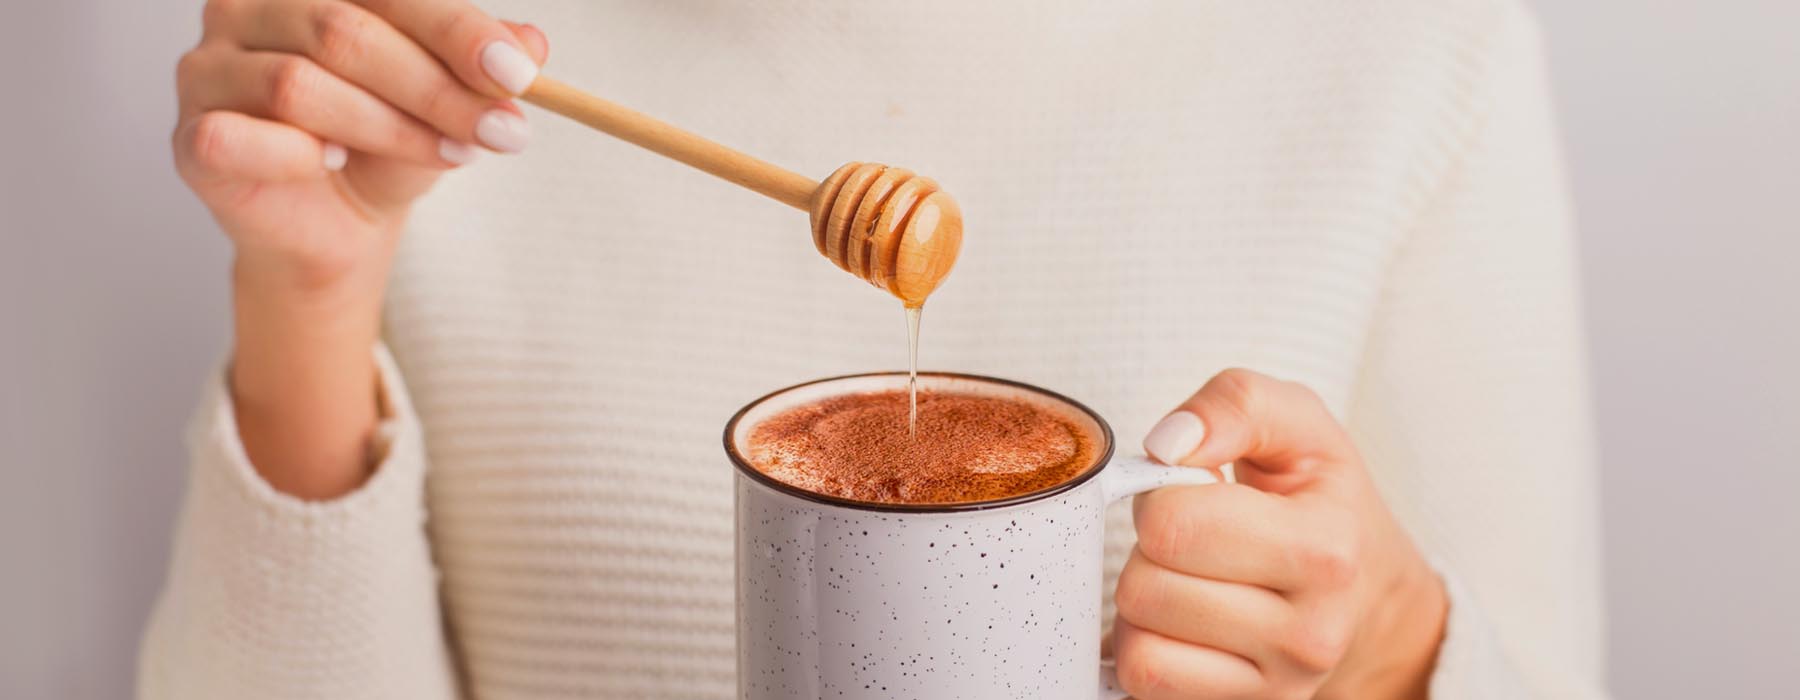 EspressoWorks Blog - 8 Sugar Alternatives for Coffee You Didn’t Know Existed